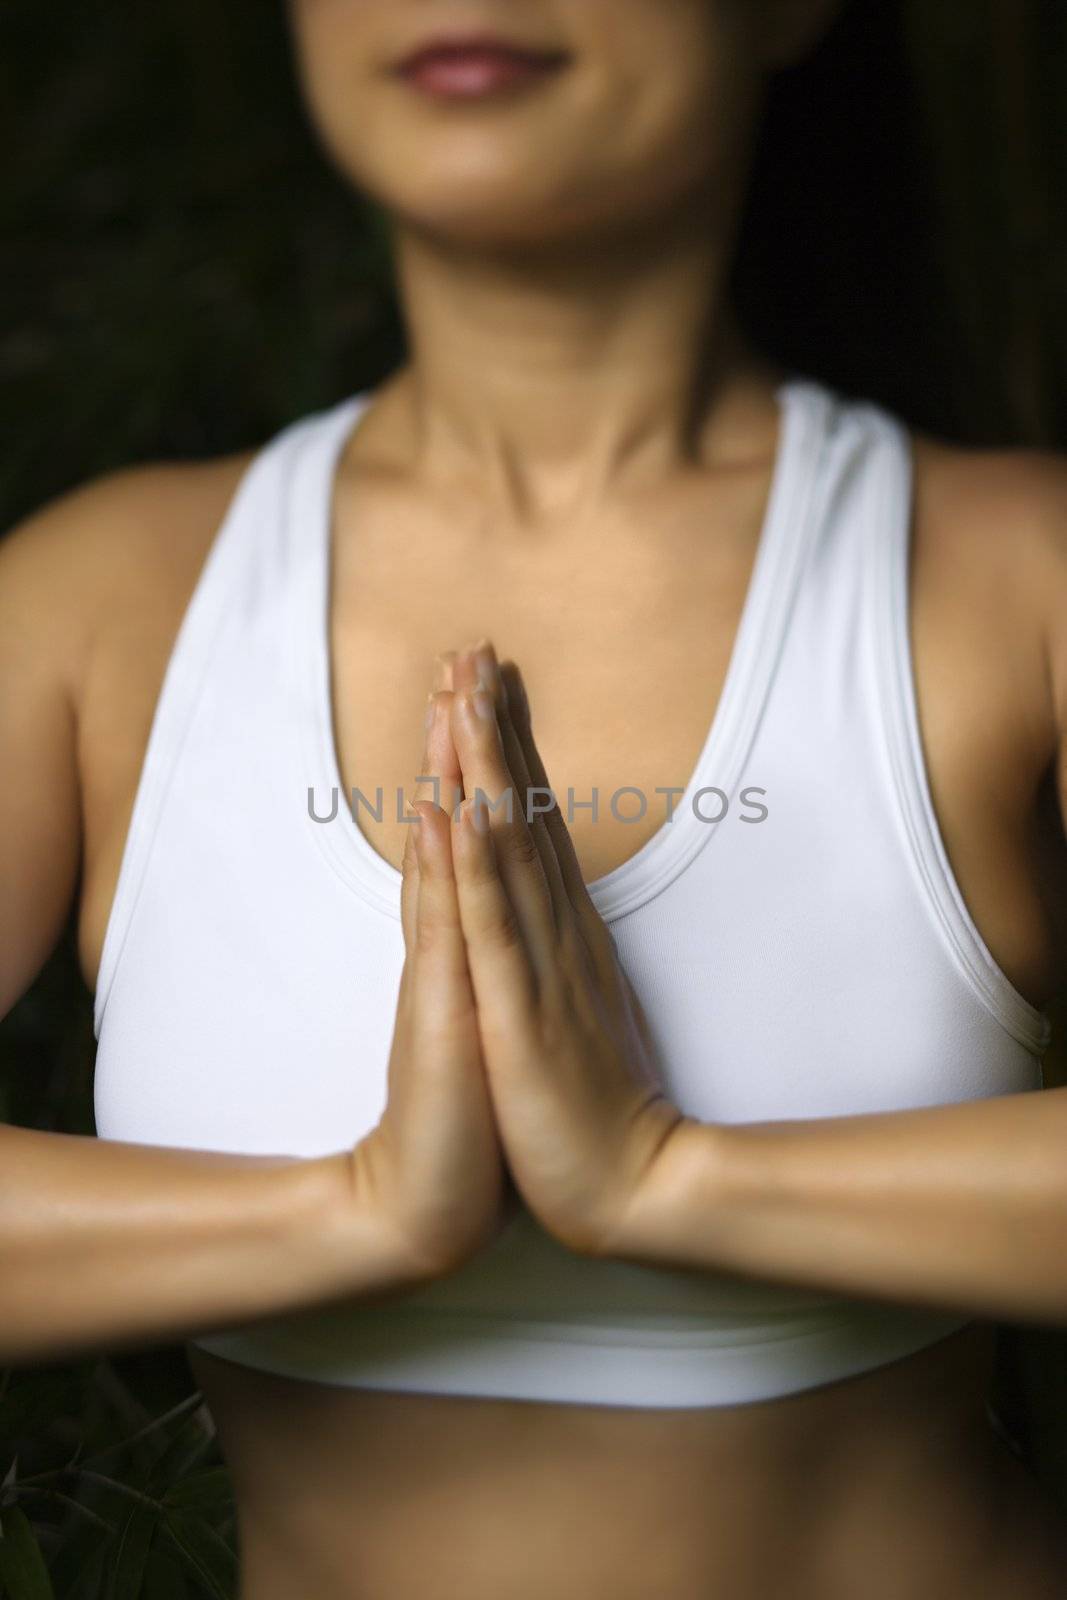 Asian woman meditating. by iofoto